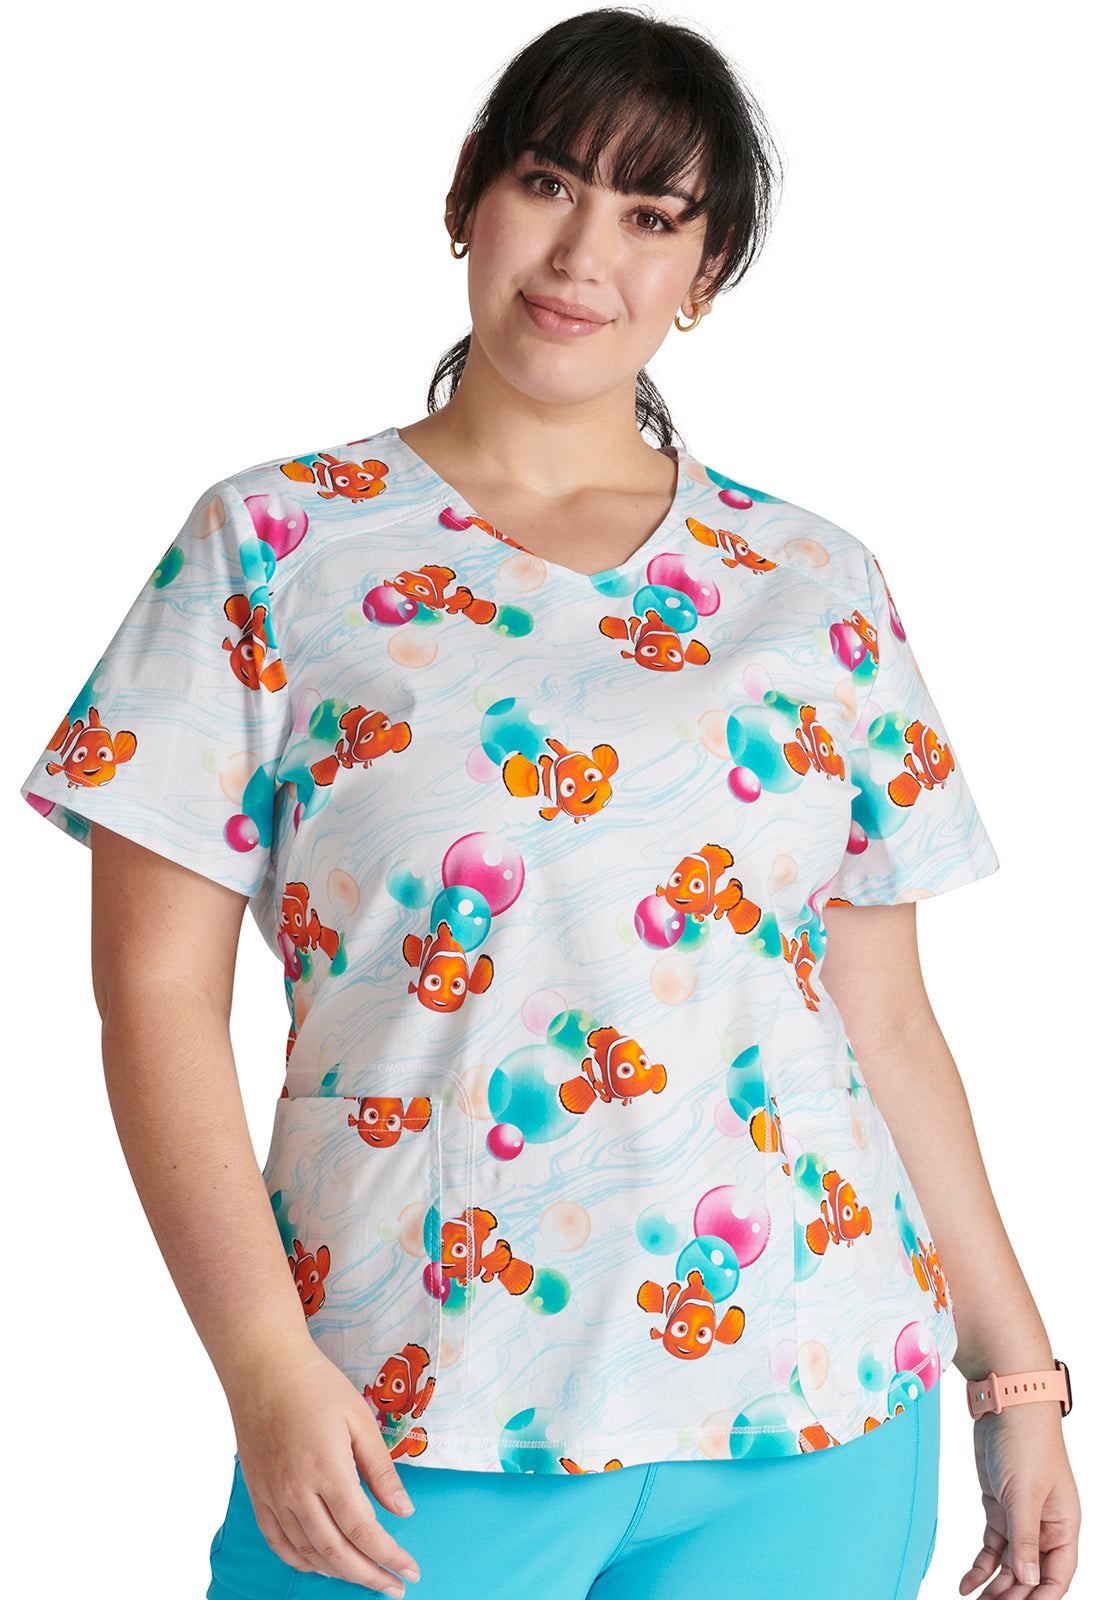 Women's Scrub Tops - Printed Scrub Shirts for Women